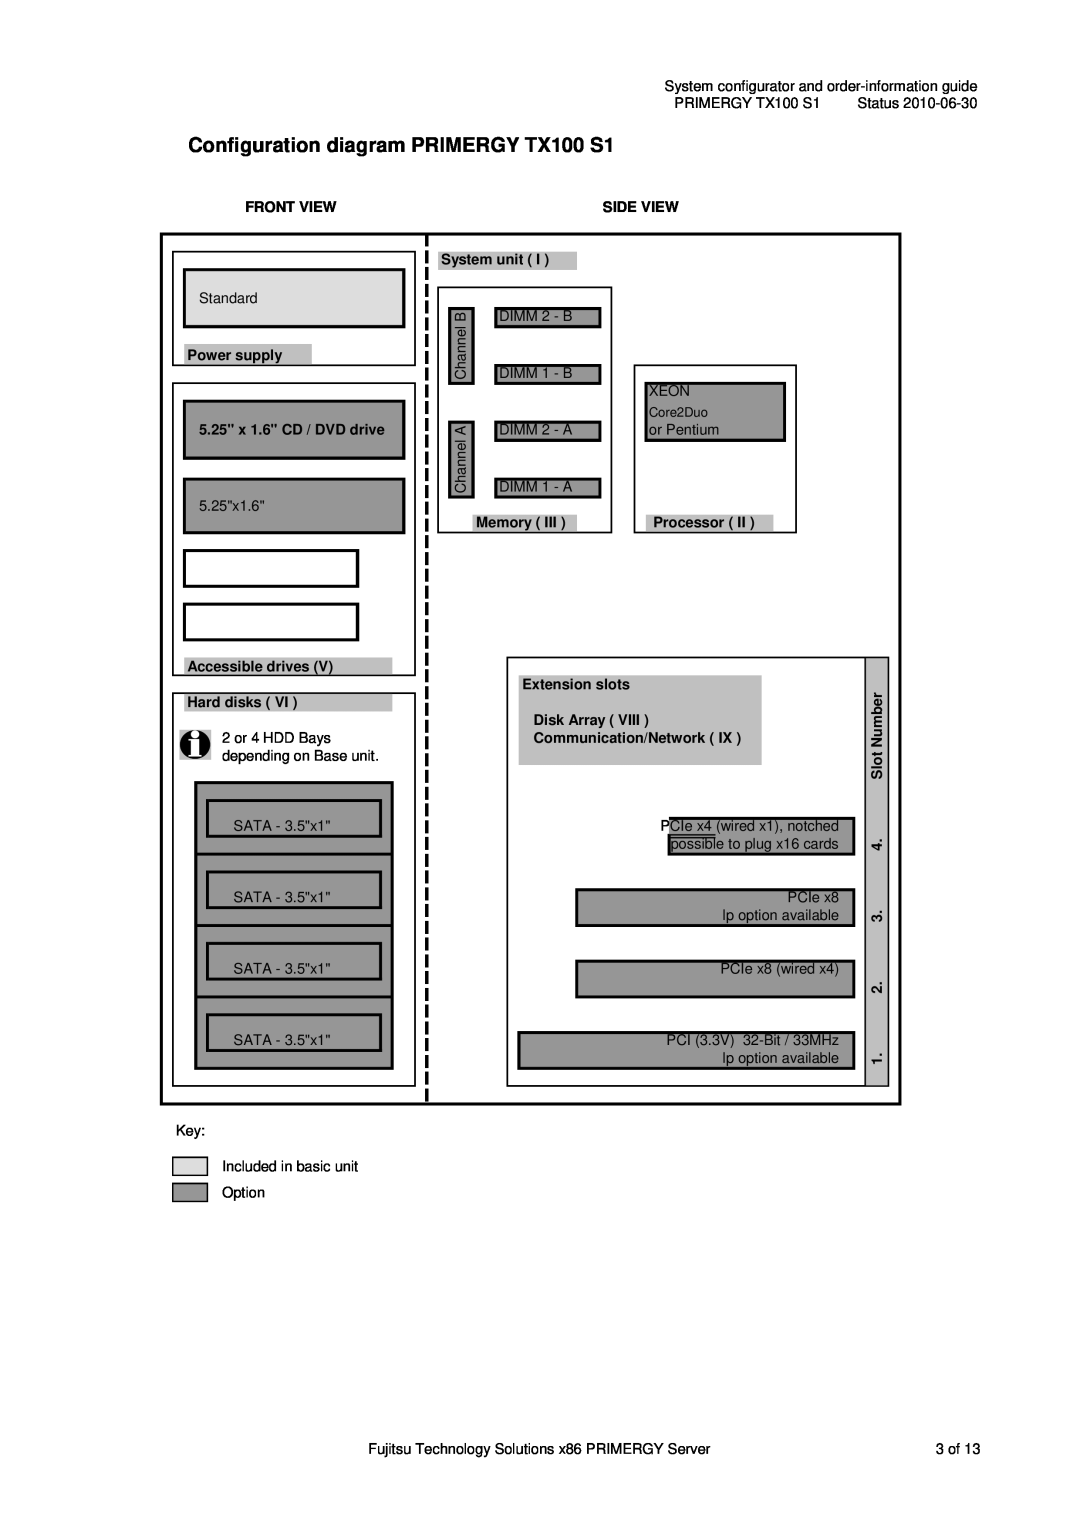 Fujitsu manual Configuration diagram PRIMERGY TX100 S1 